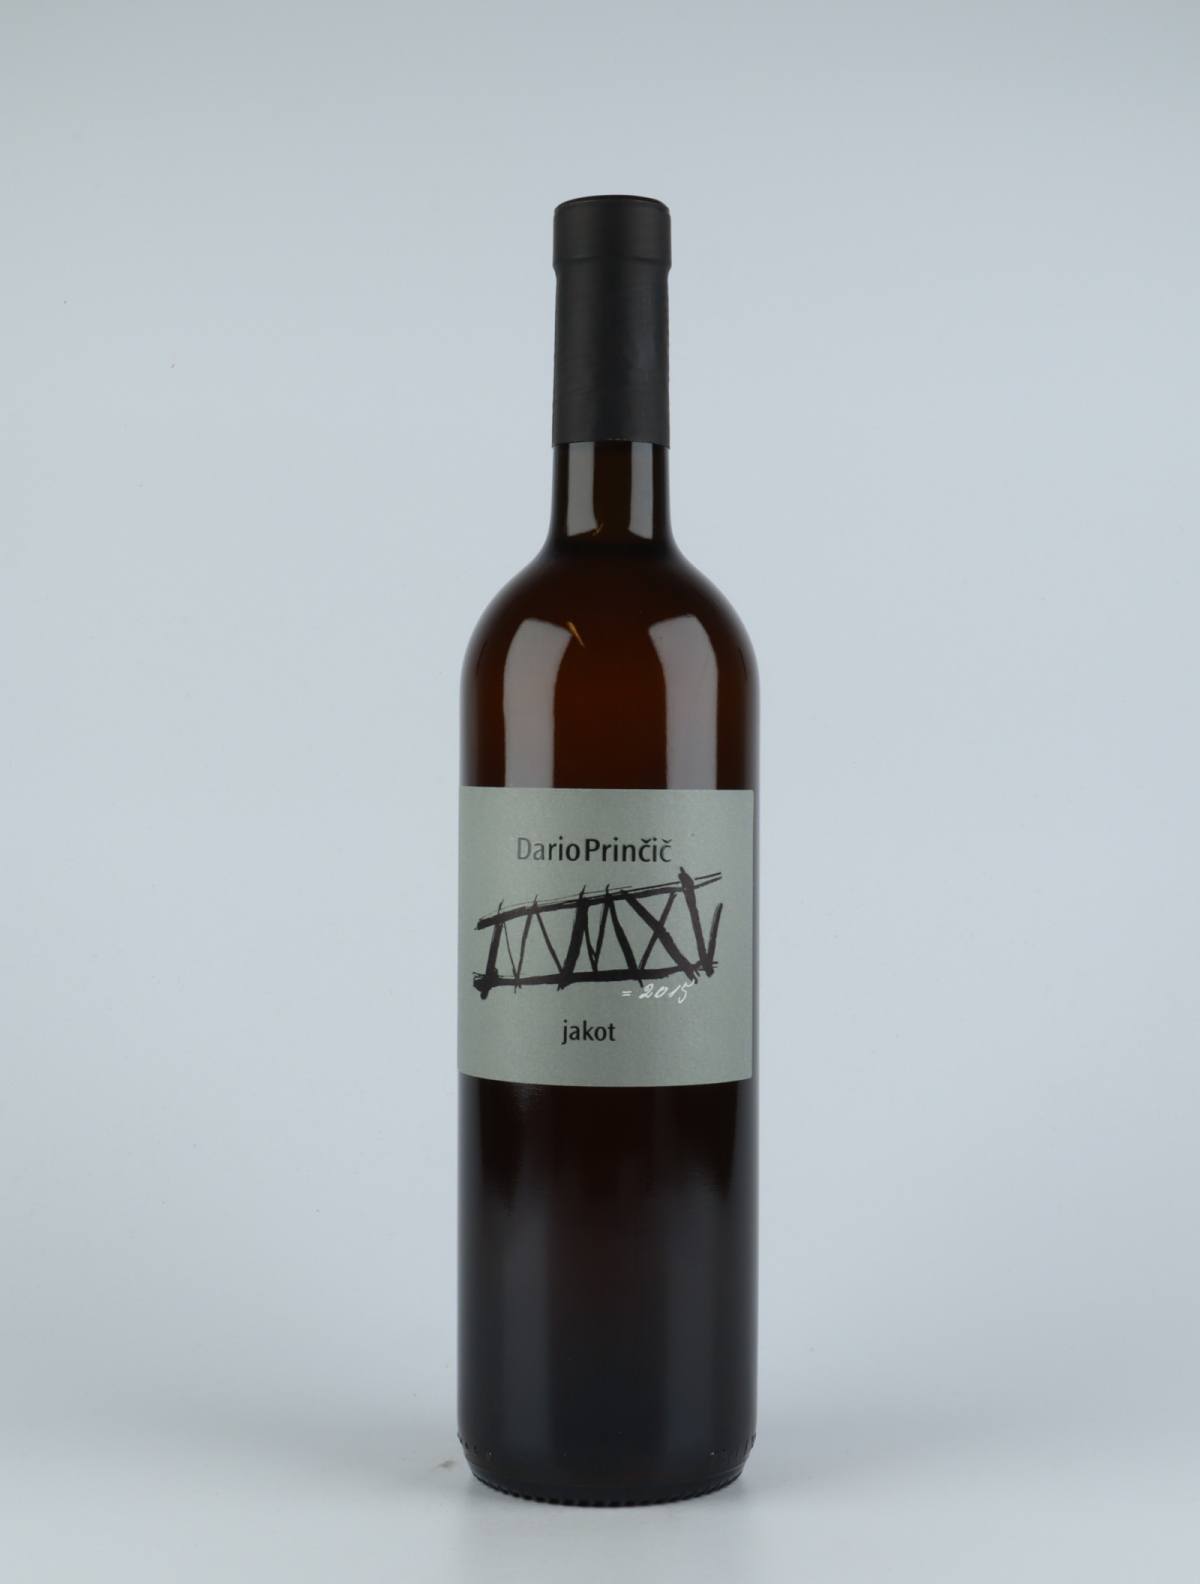 A bottle 2015 Bianco Jakot Orange wine from Dario Princic, Friuli in Italy